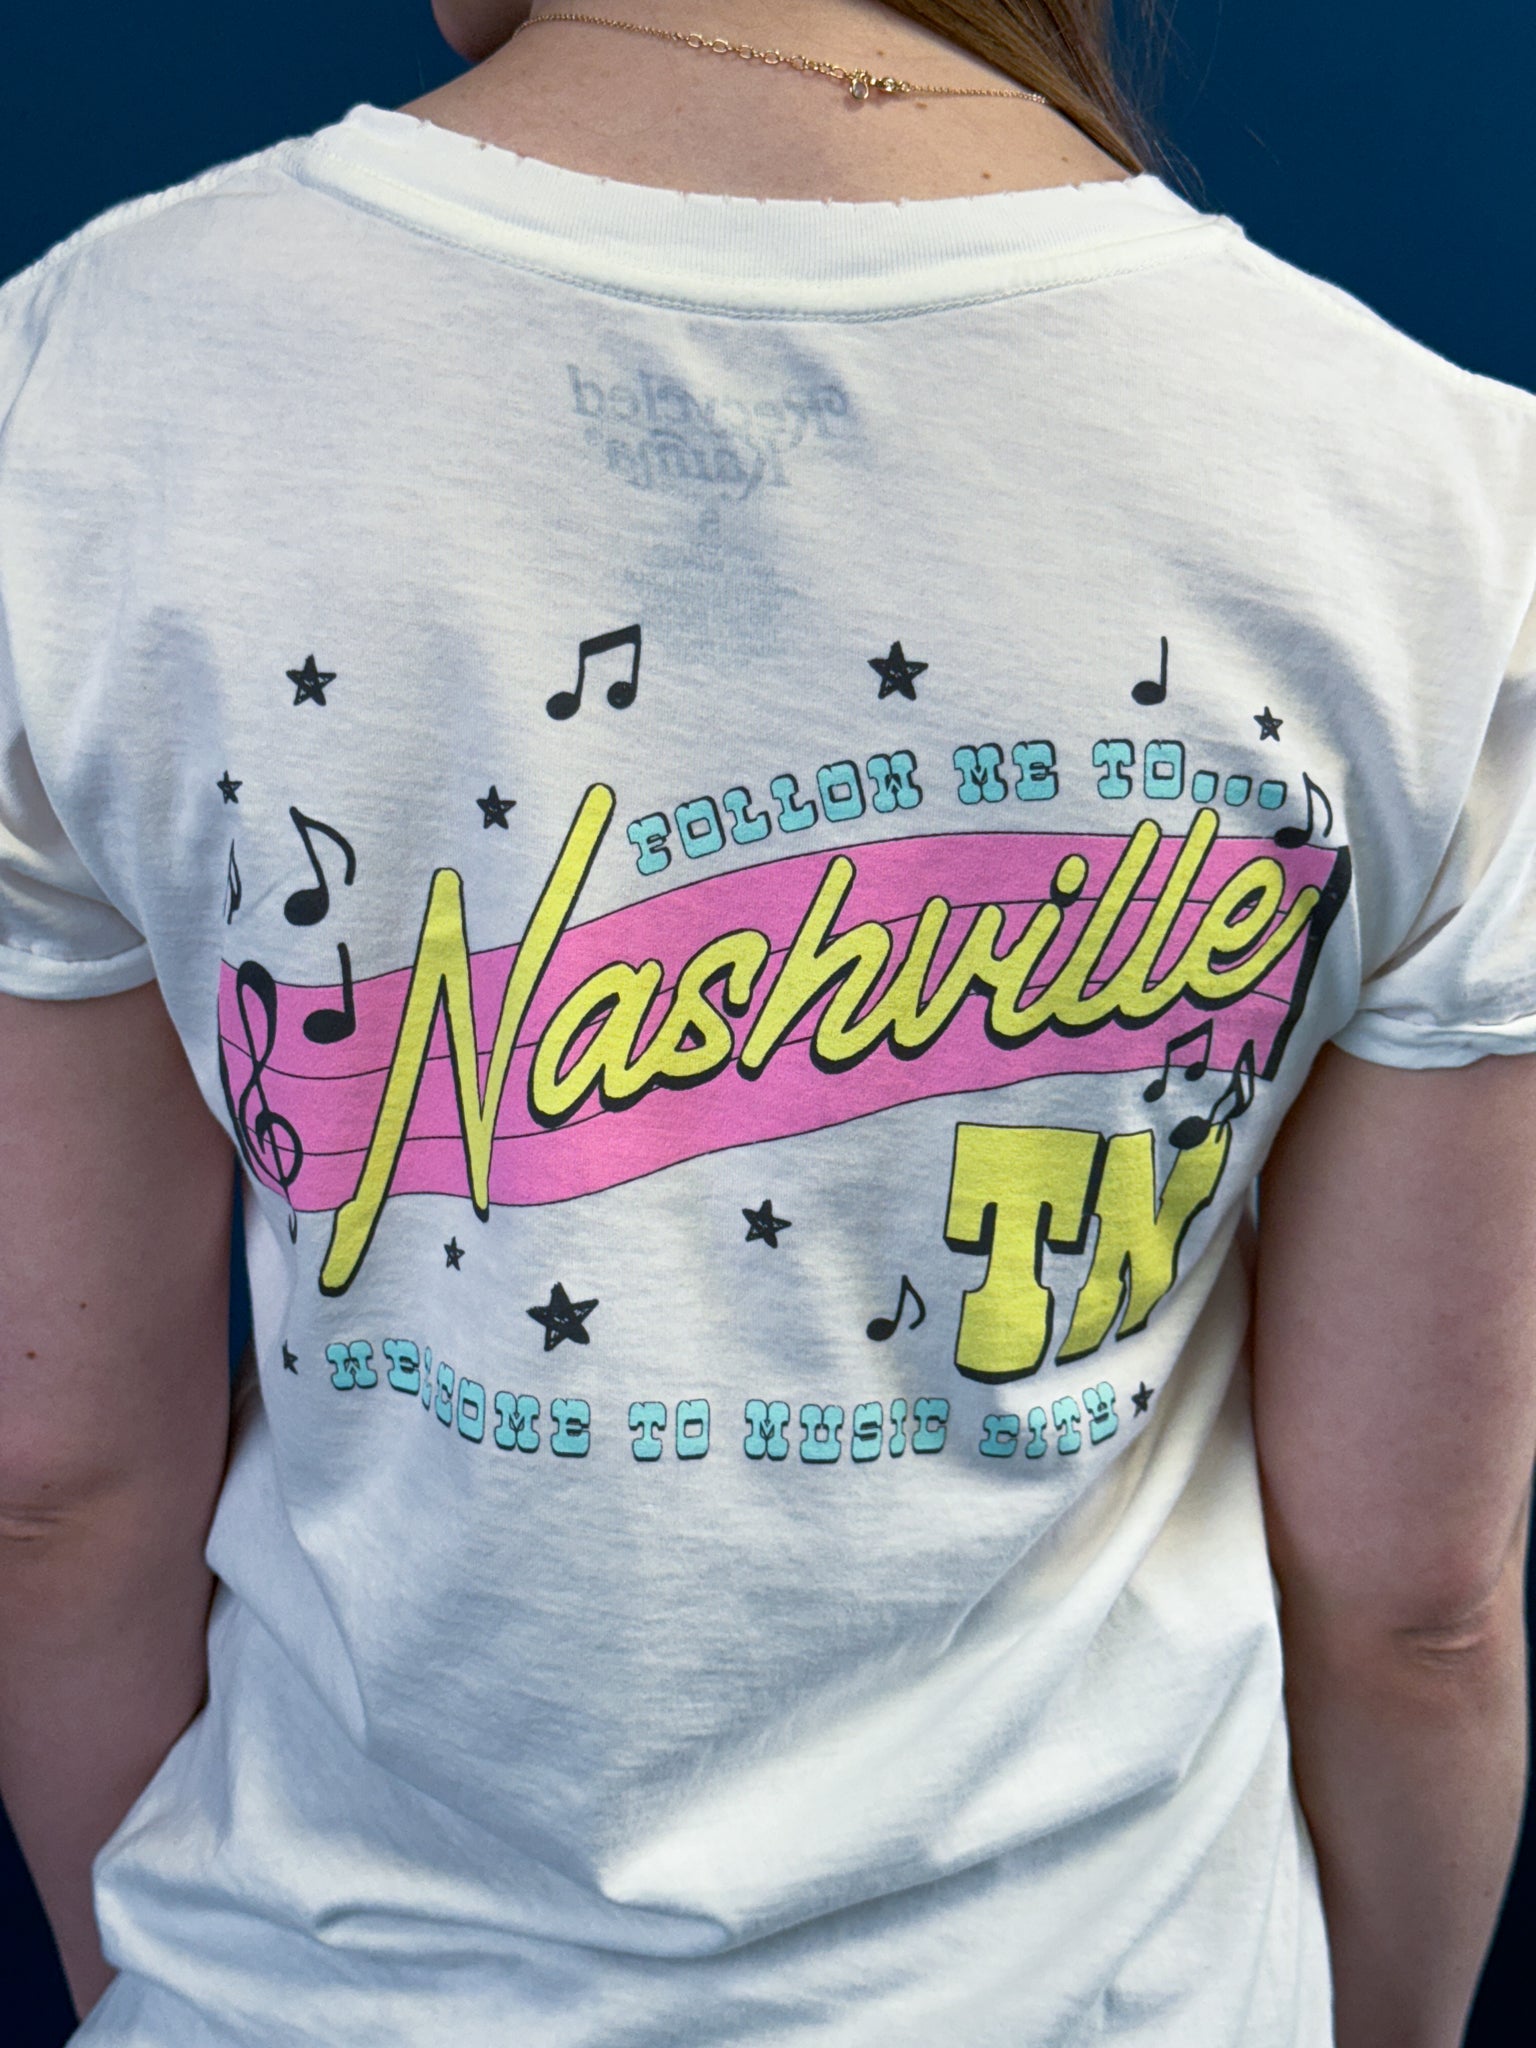 Nashville Graphic Tee